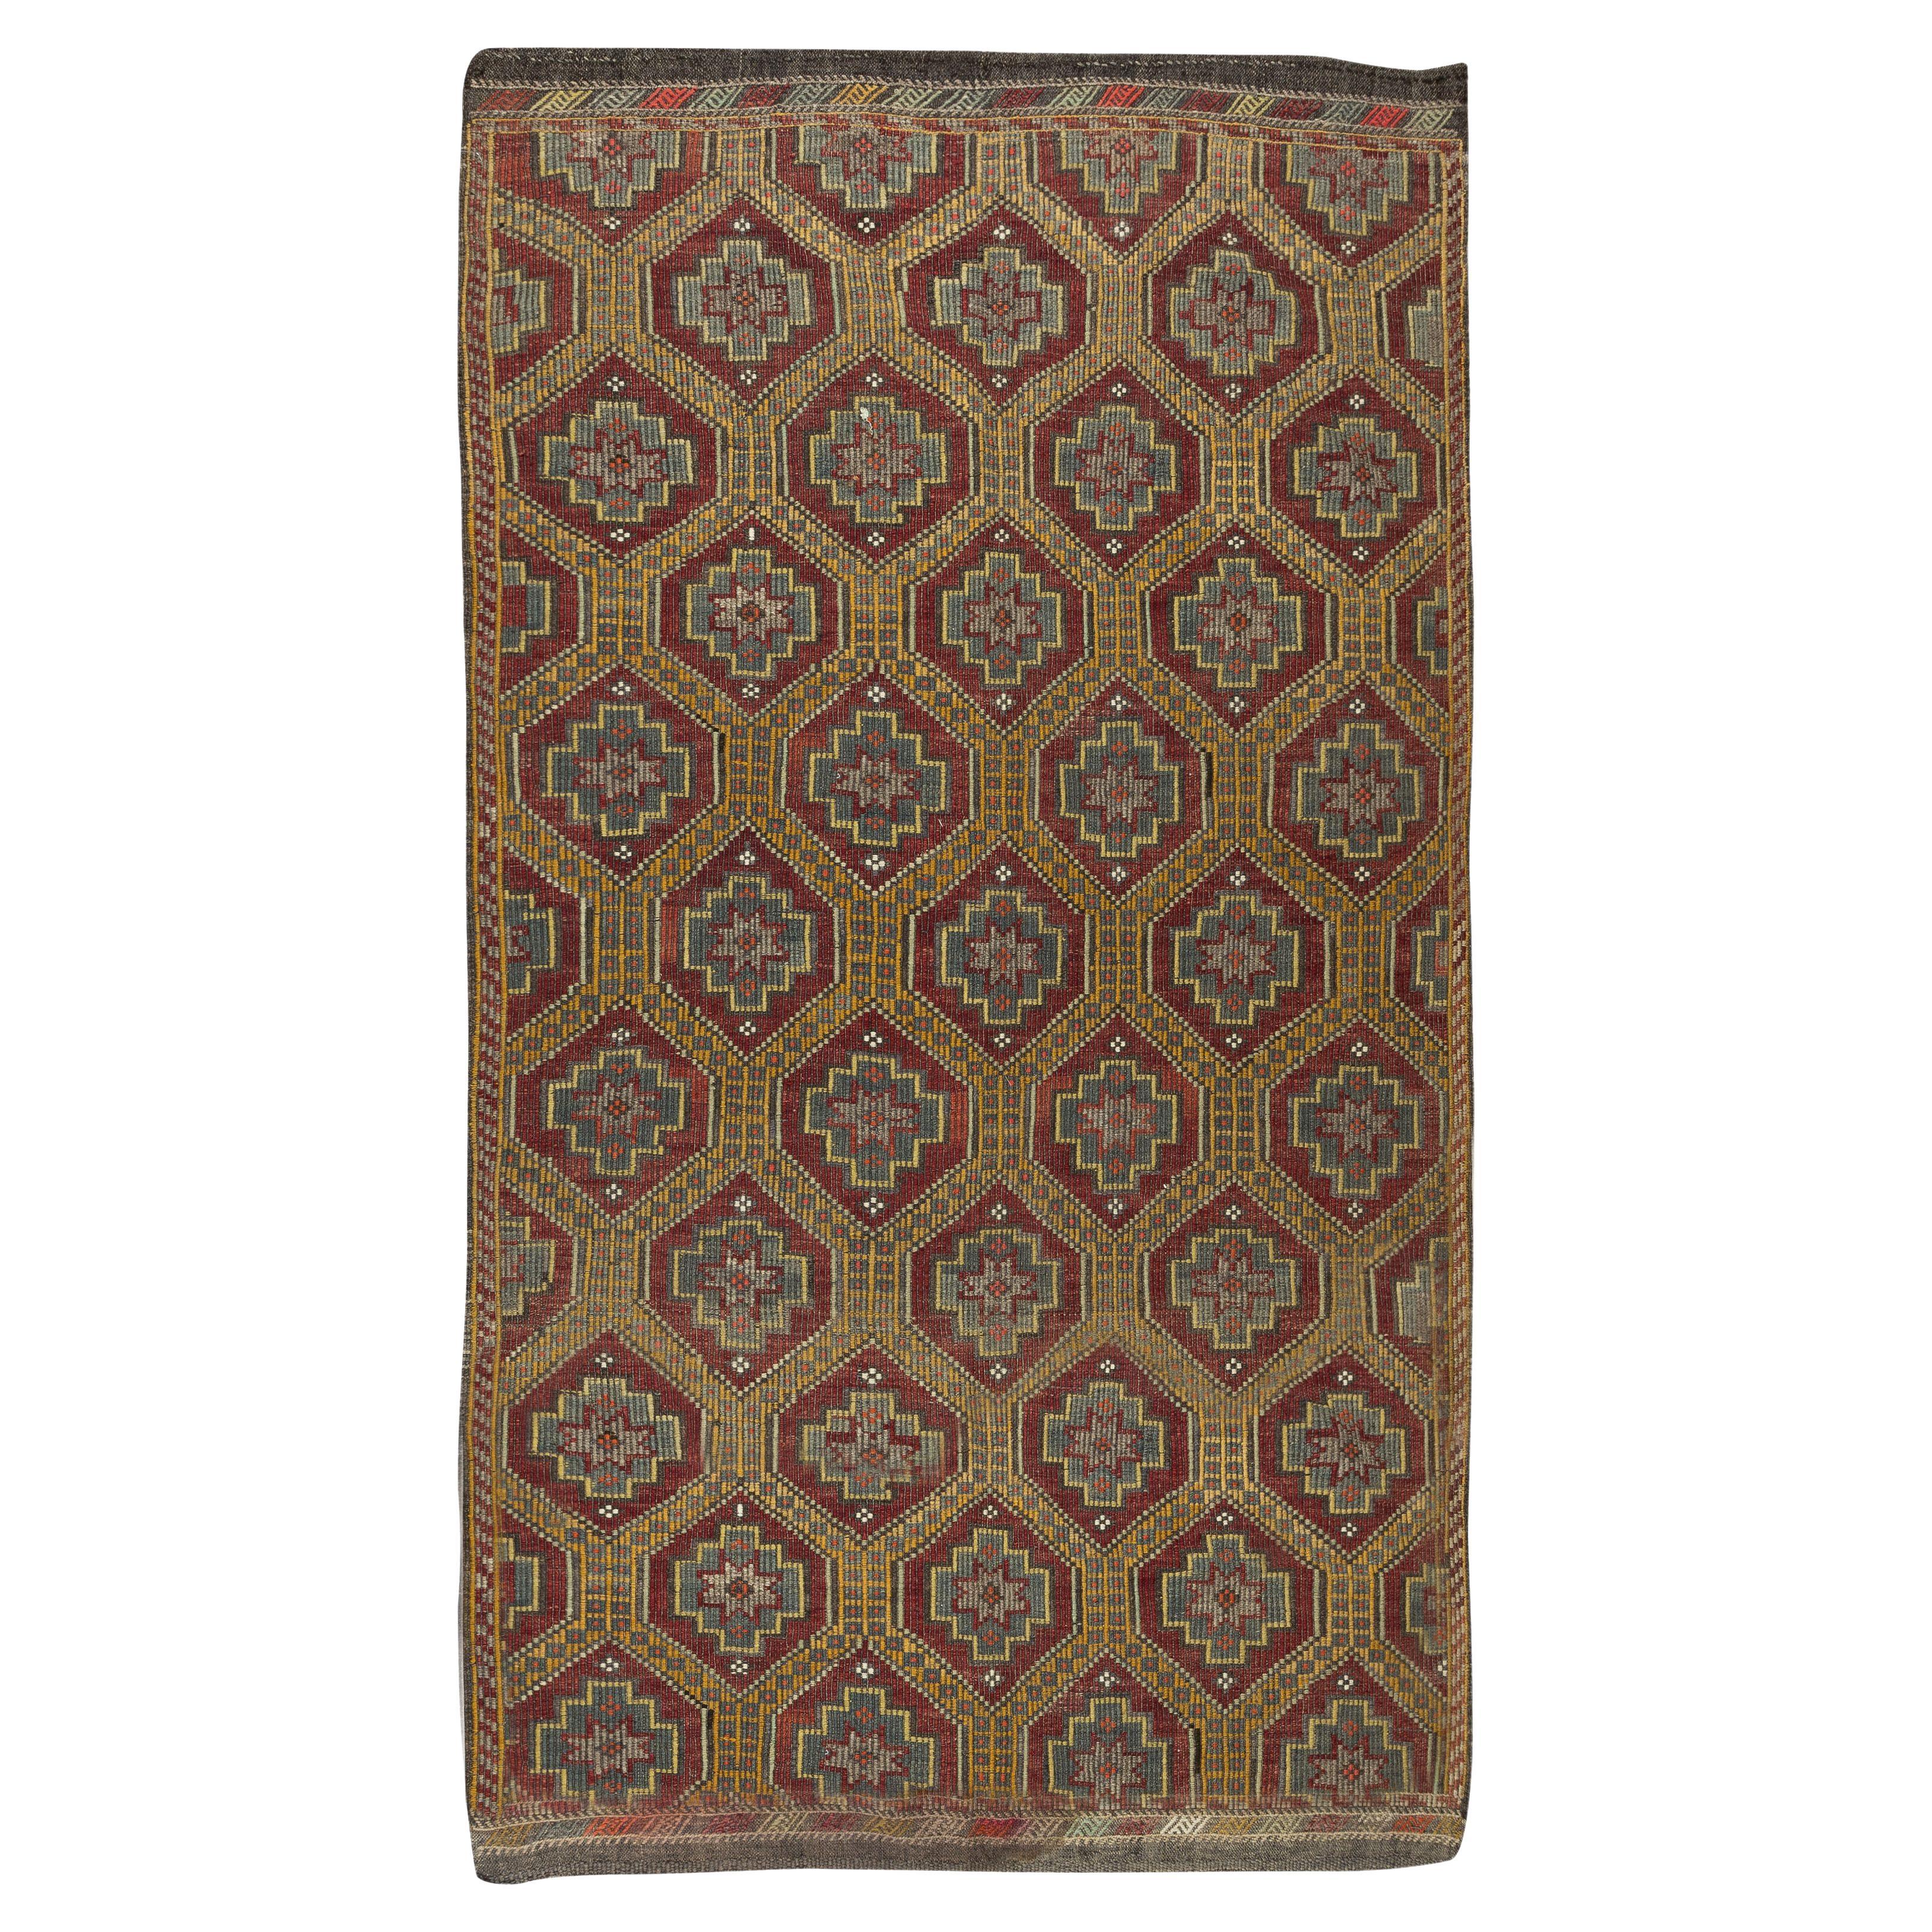 Jijim Kilim turco vintage, alfombra tejida a mano con motivos florales, 100% lana